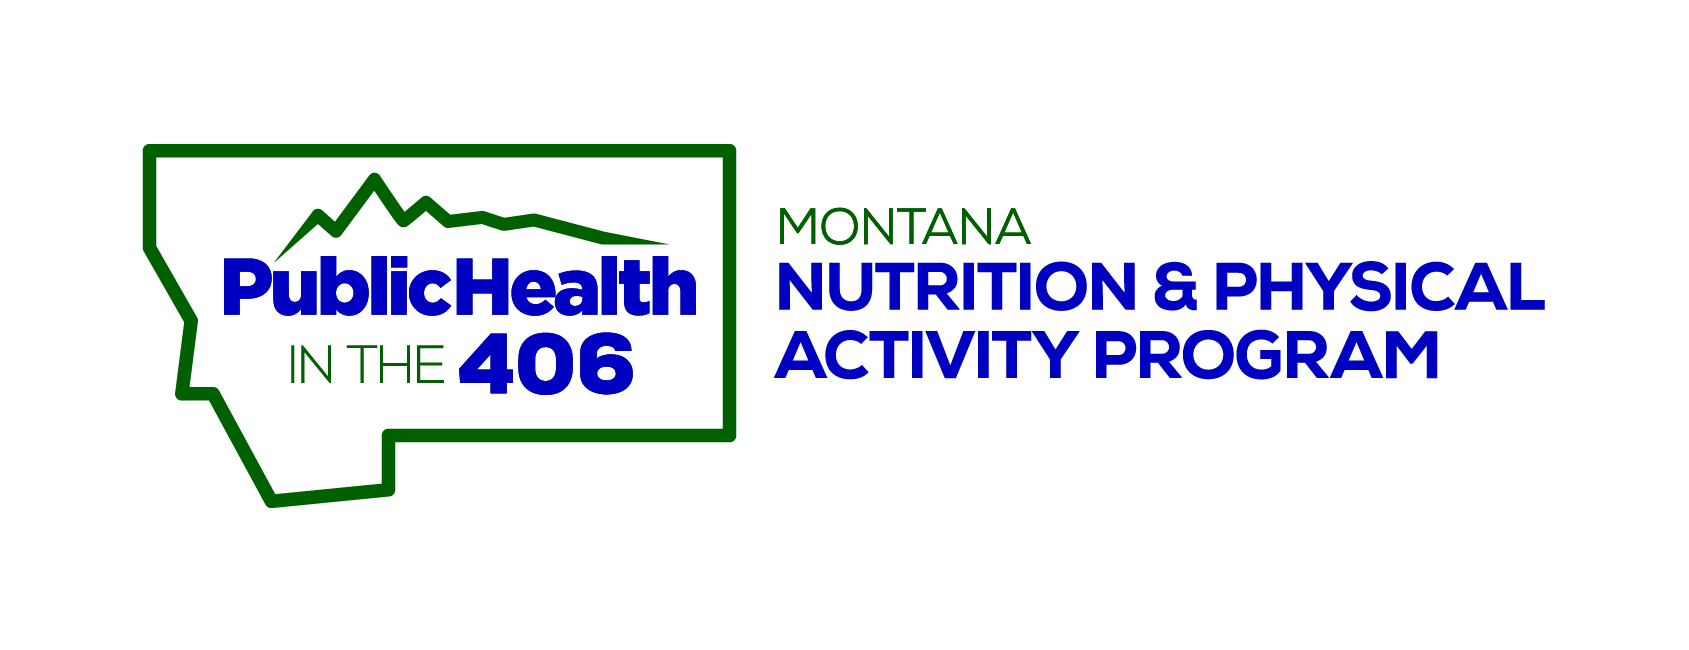 Montana Nutrition and Physical Activity Program Logo